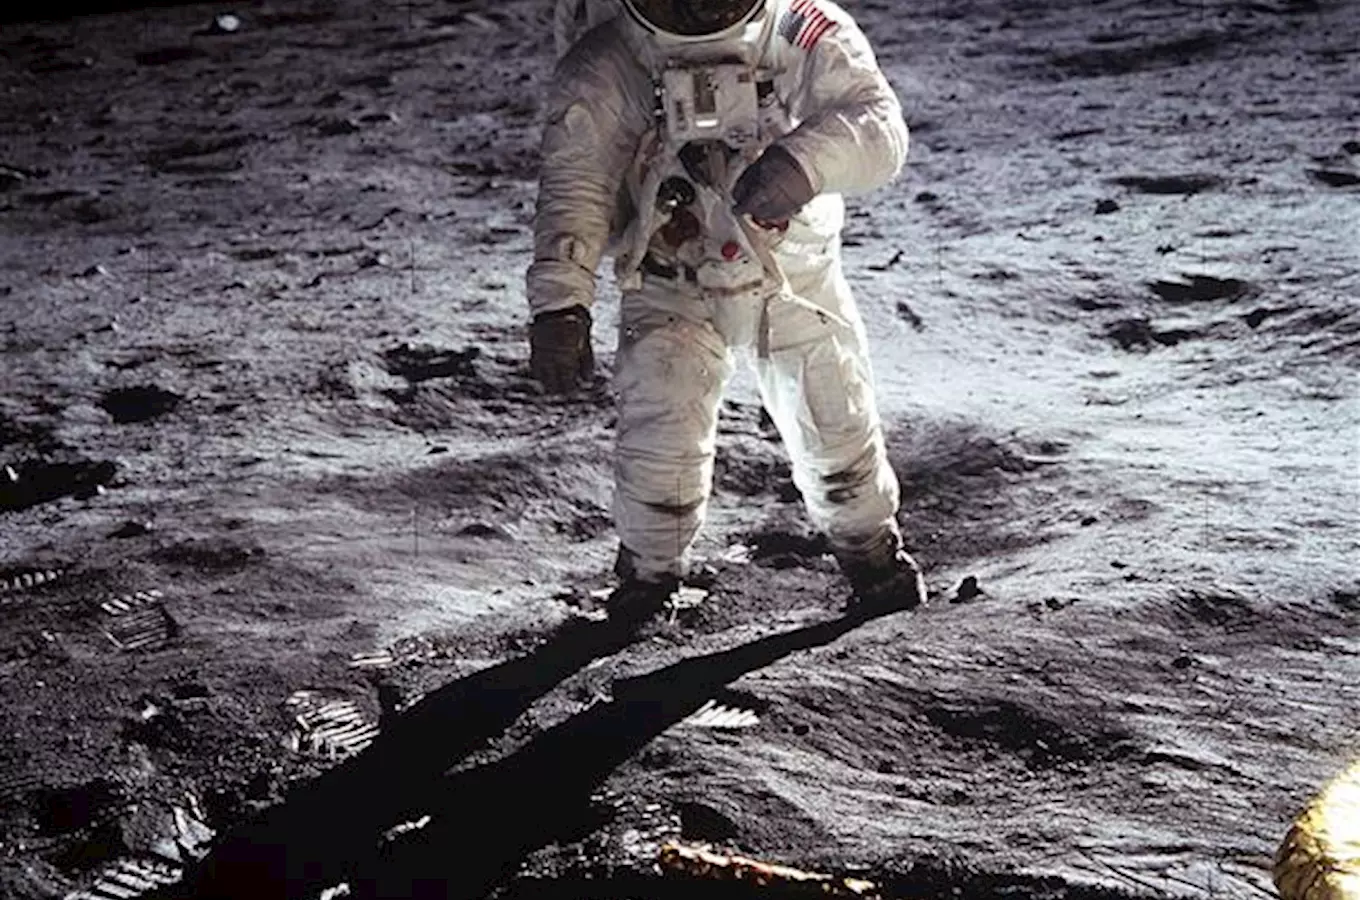 Space Night XI: Apollo 11